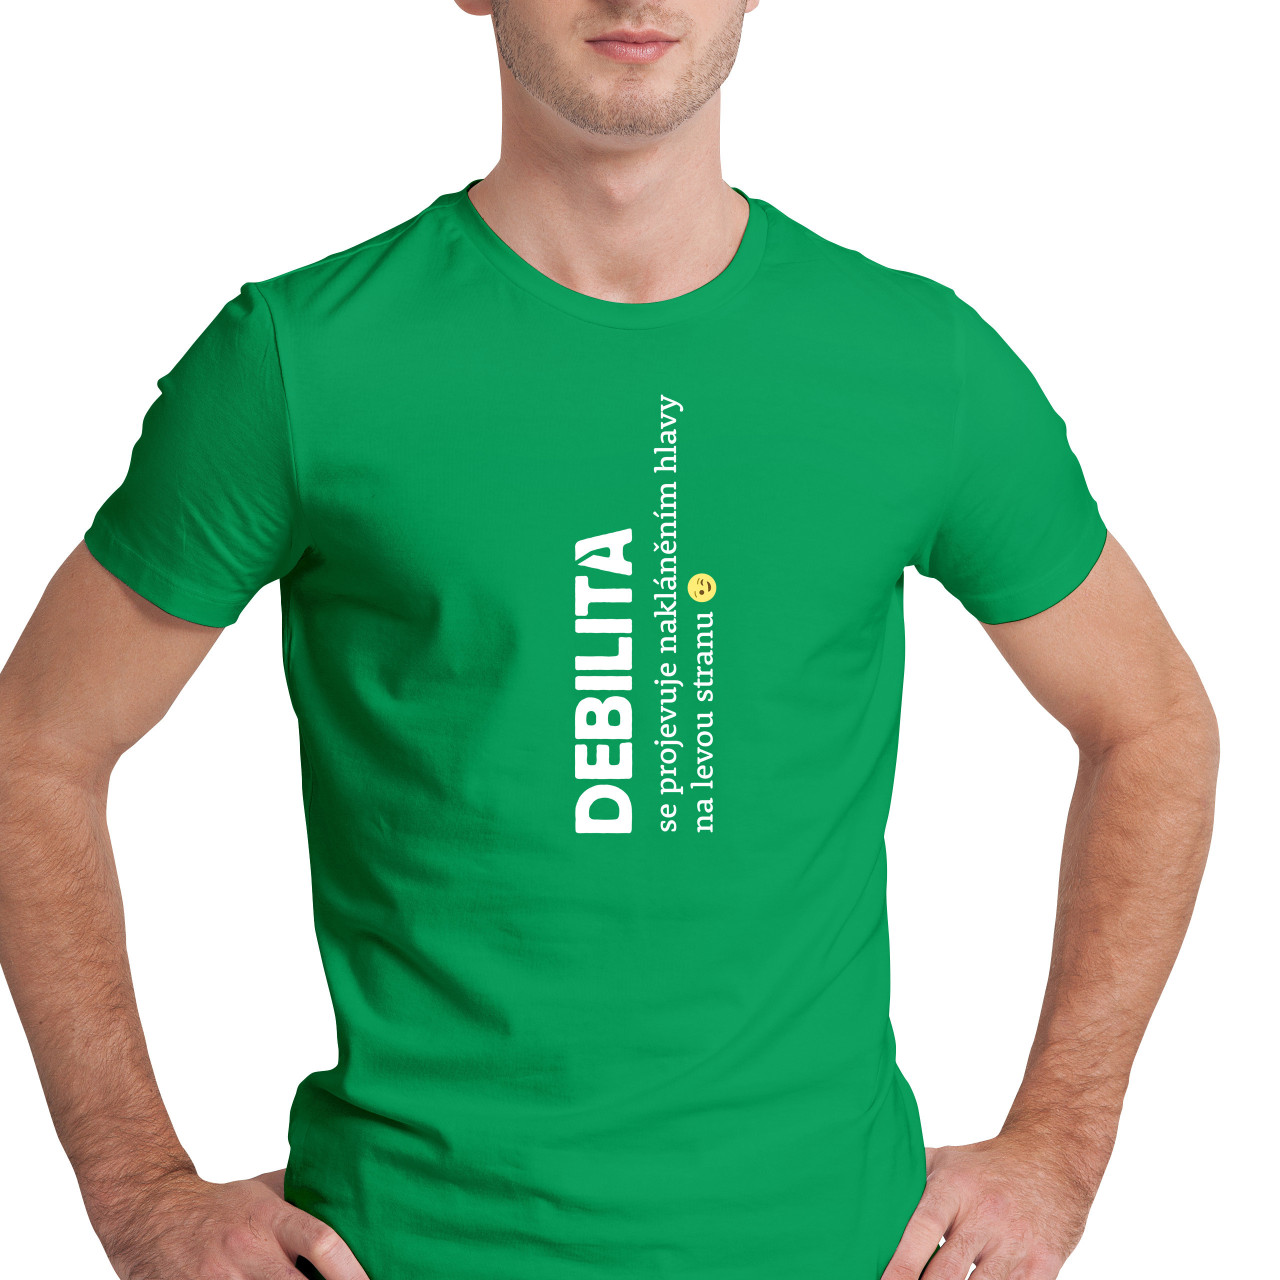 Pánské tričko s potiskem “Debilita”